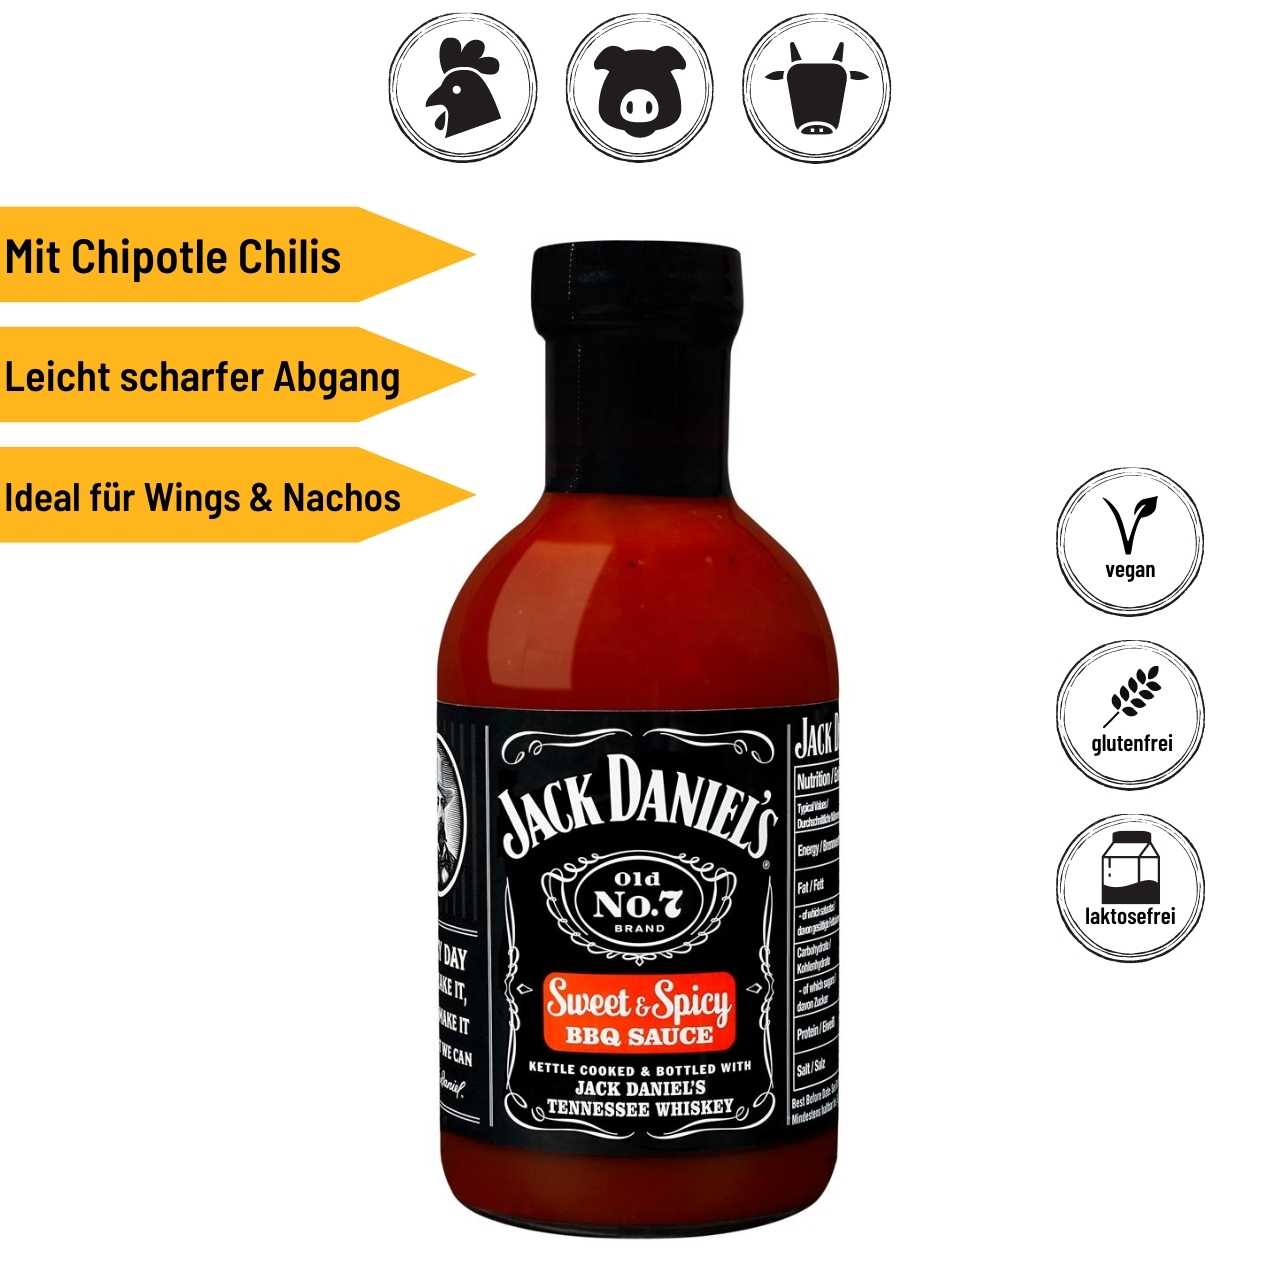 Jack Daniel's Sweet & Spicy BBQ Sauce